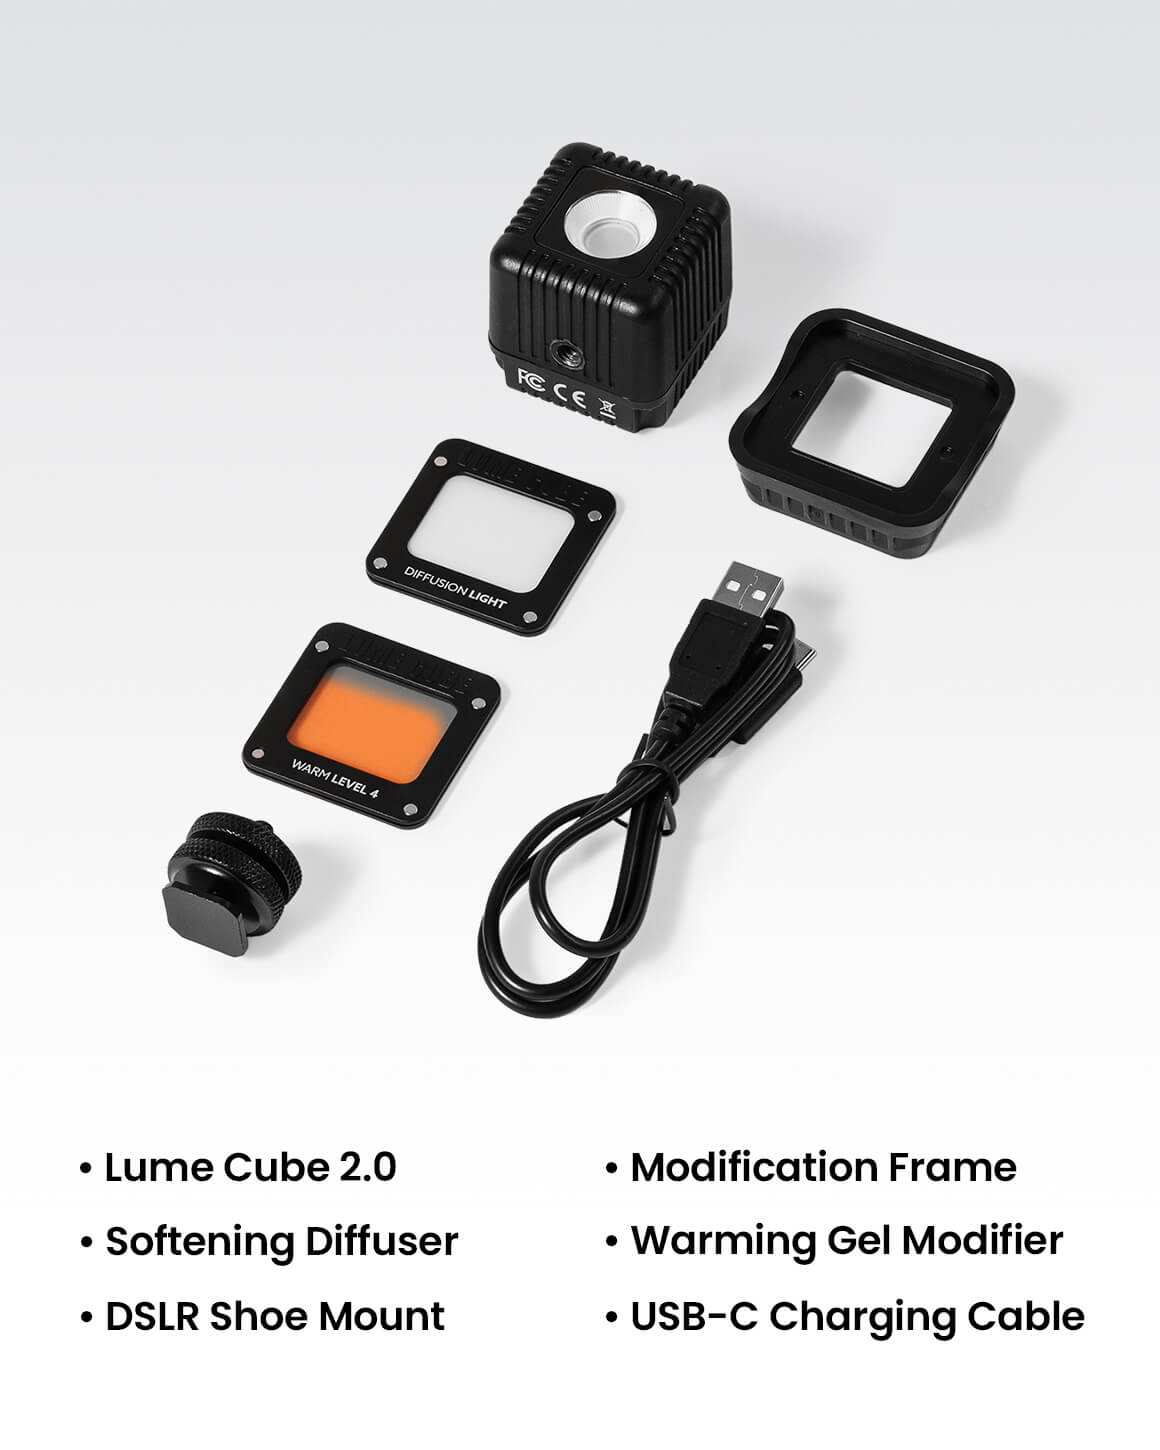 Flad Se igennem tag på sightseeing Lume Cube 2.0 - Waterproof LED Photo & Video Light Cube